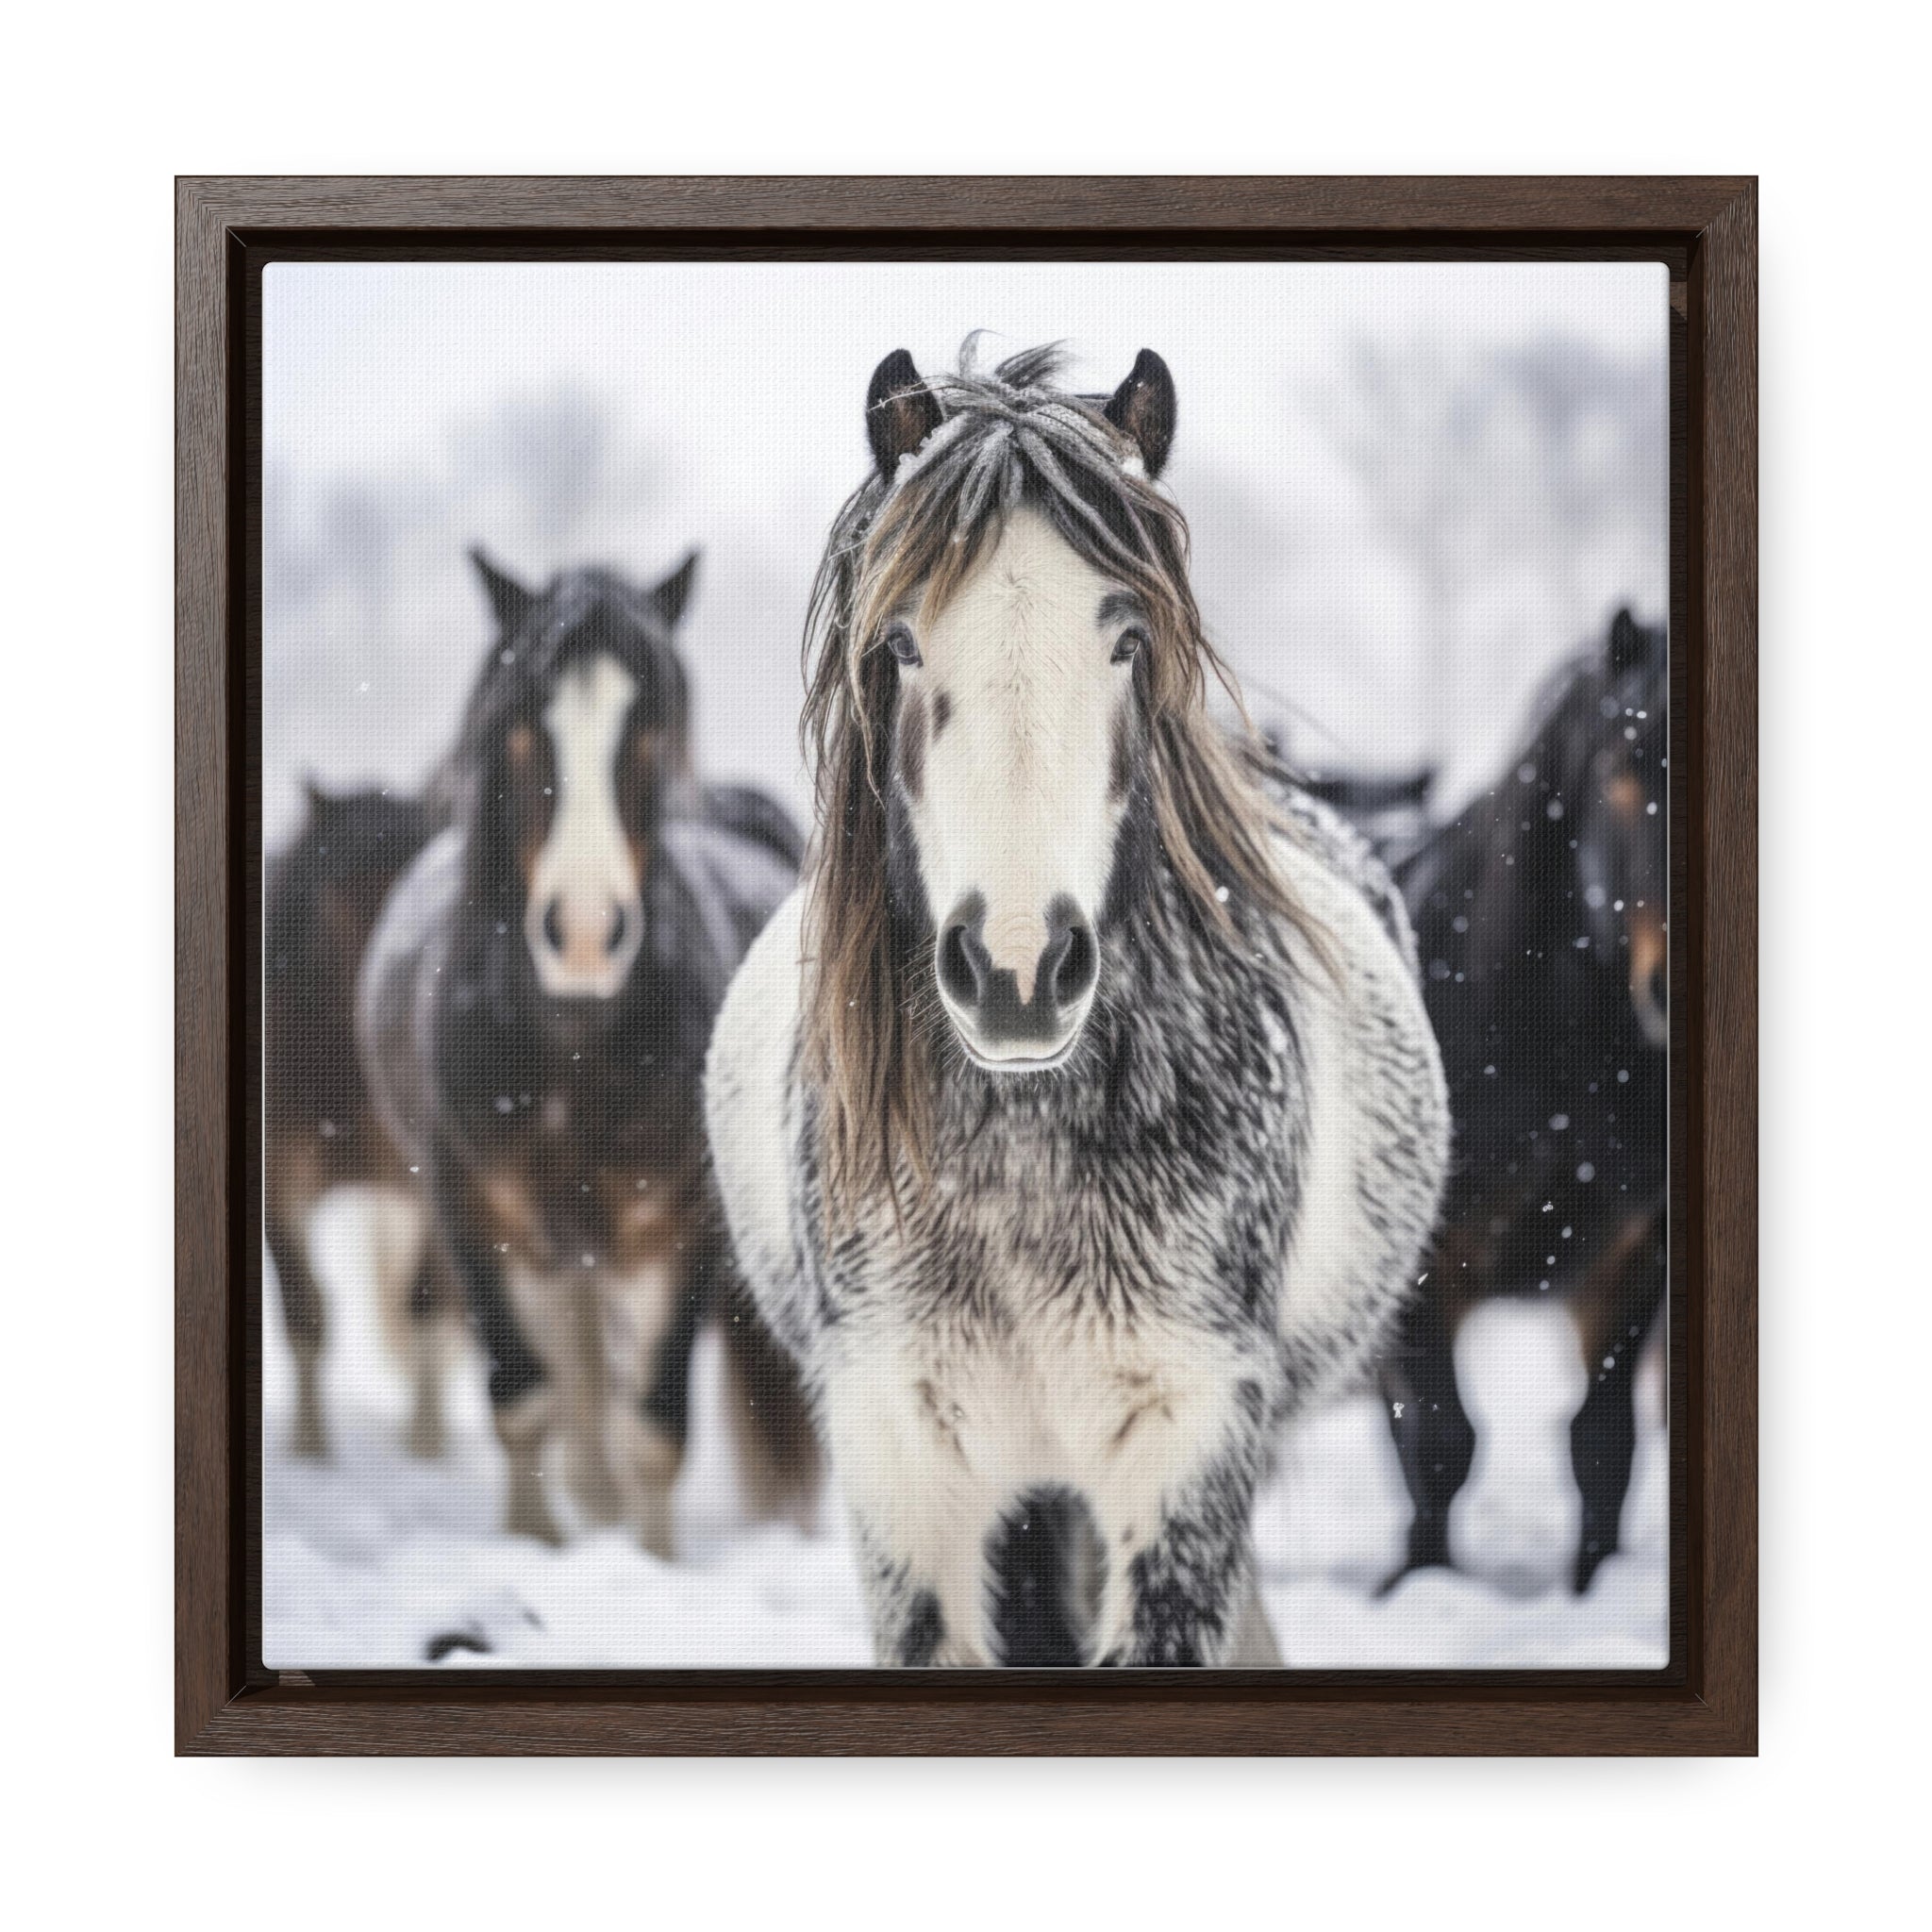 Stallion | Gallery Canvas Wraps, Square Frame